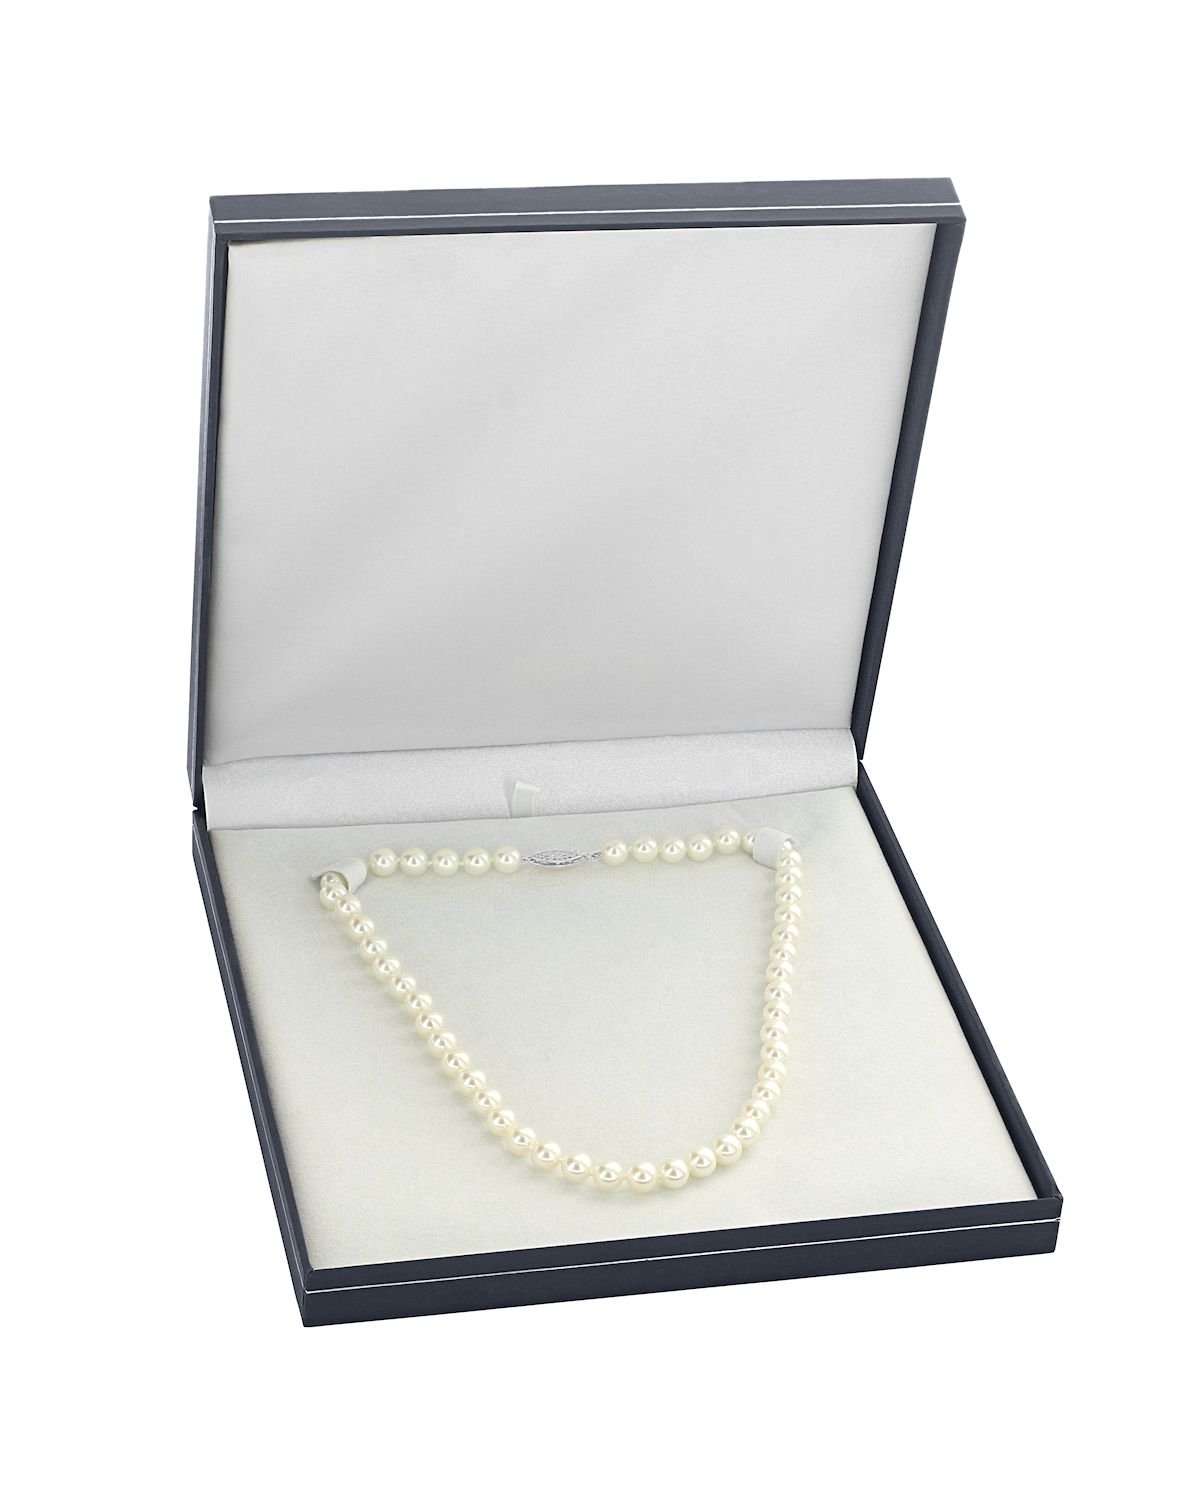 8.5-9.0mm Hanadama Akoya White Pearl Necklace - Fourth Image